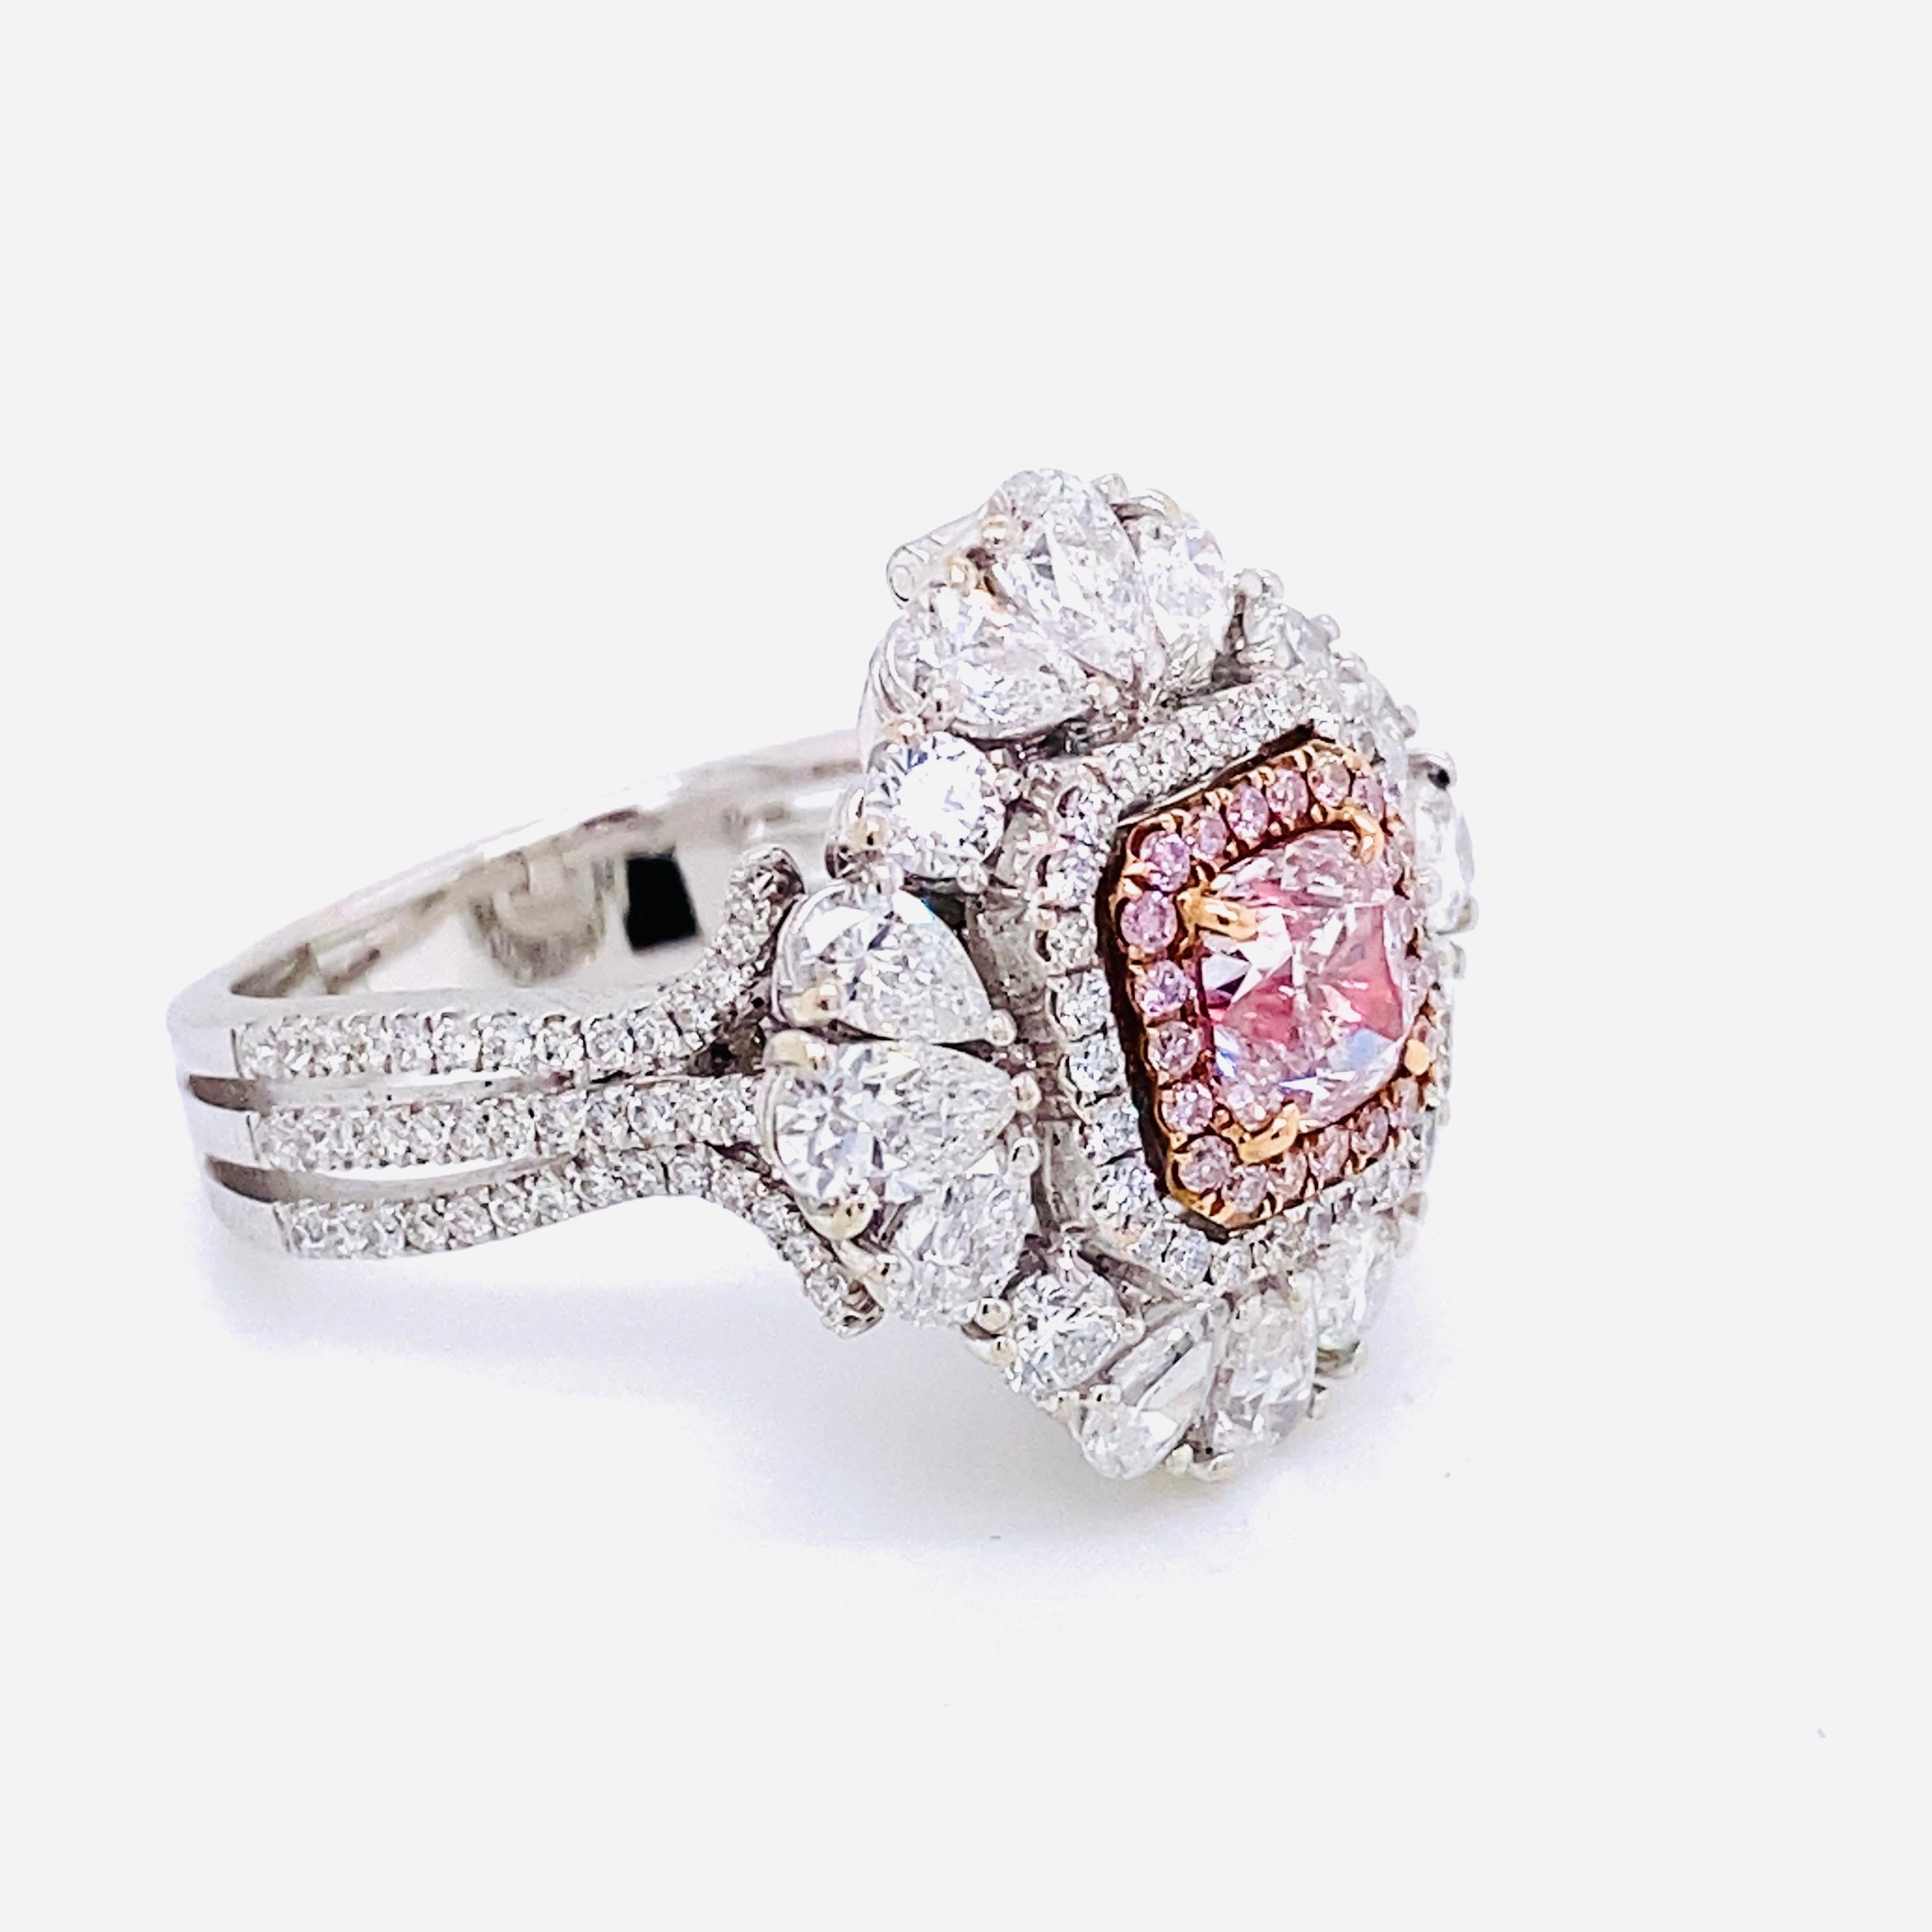 Cushion Cut Emilio Jewelry Gia Certified 1.00 Carat Faint Pink Diamond Ring